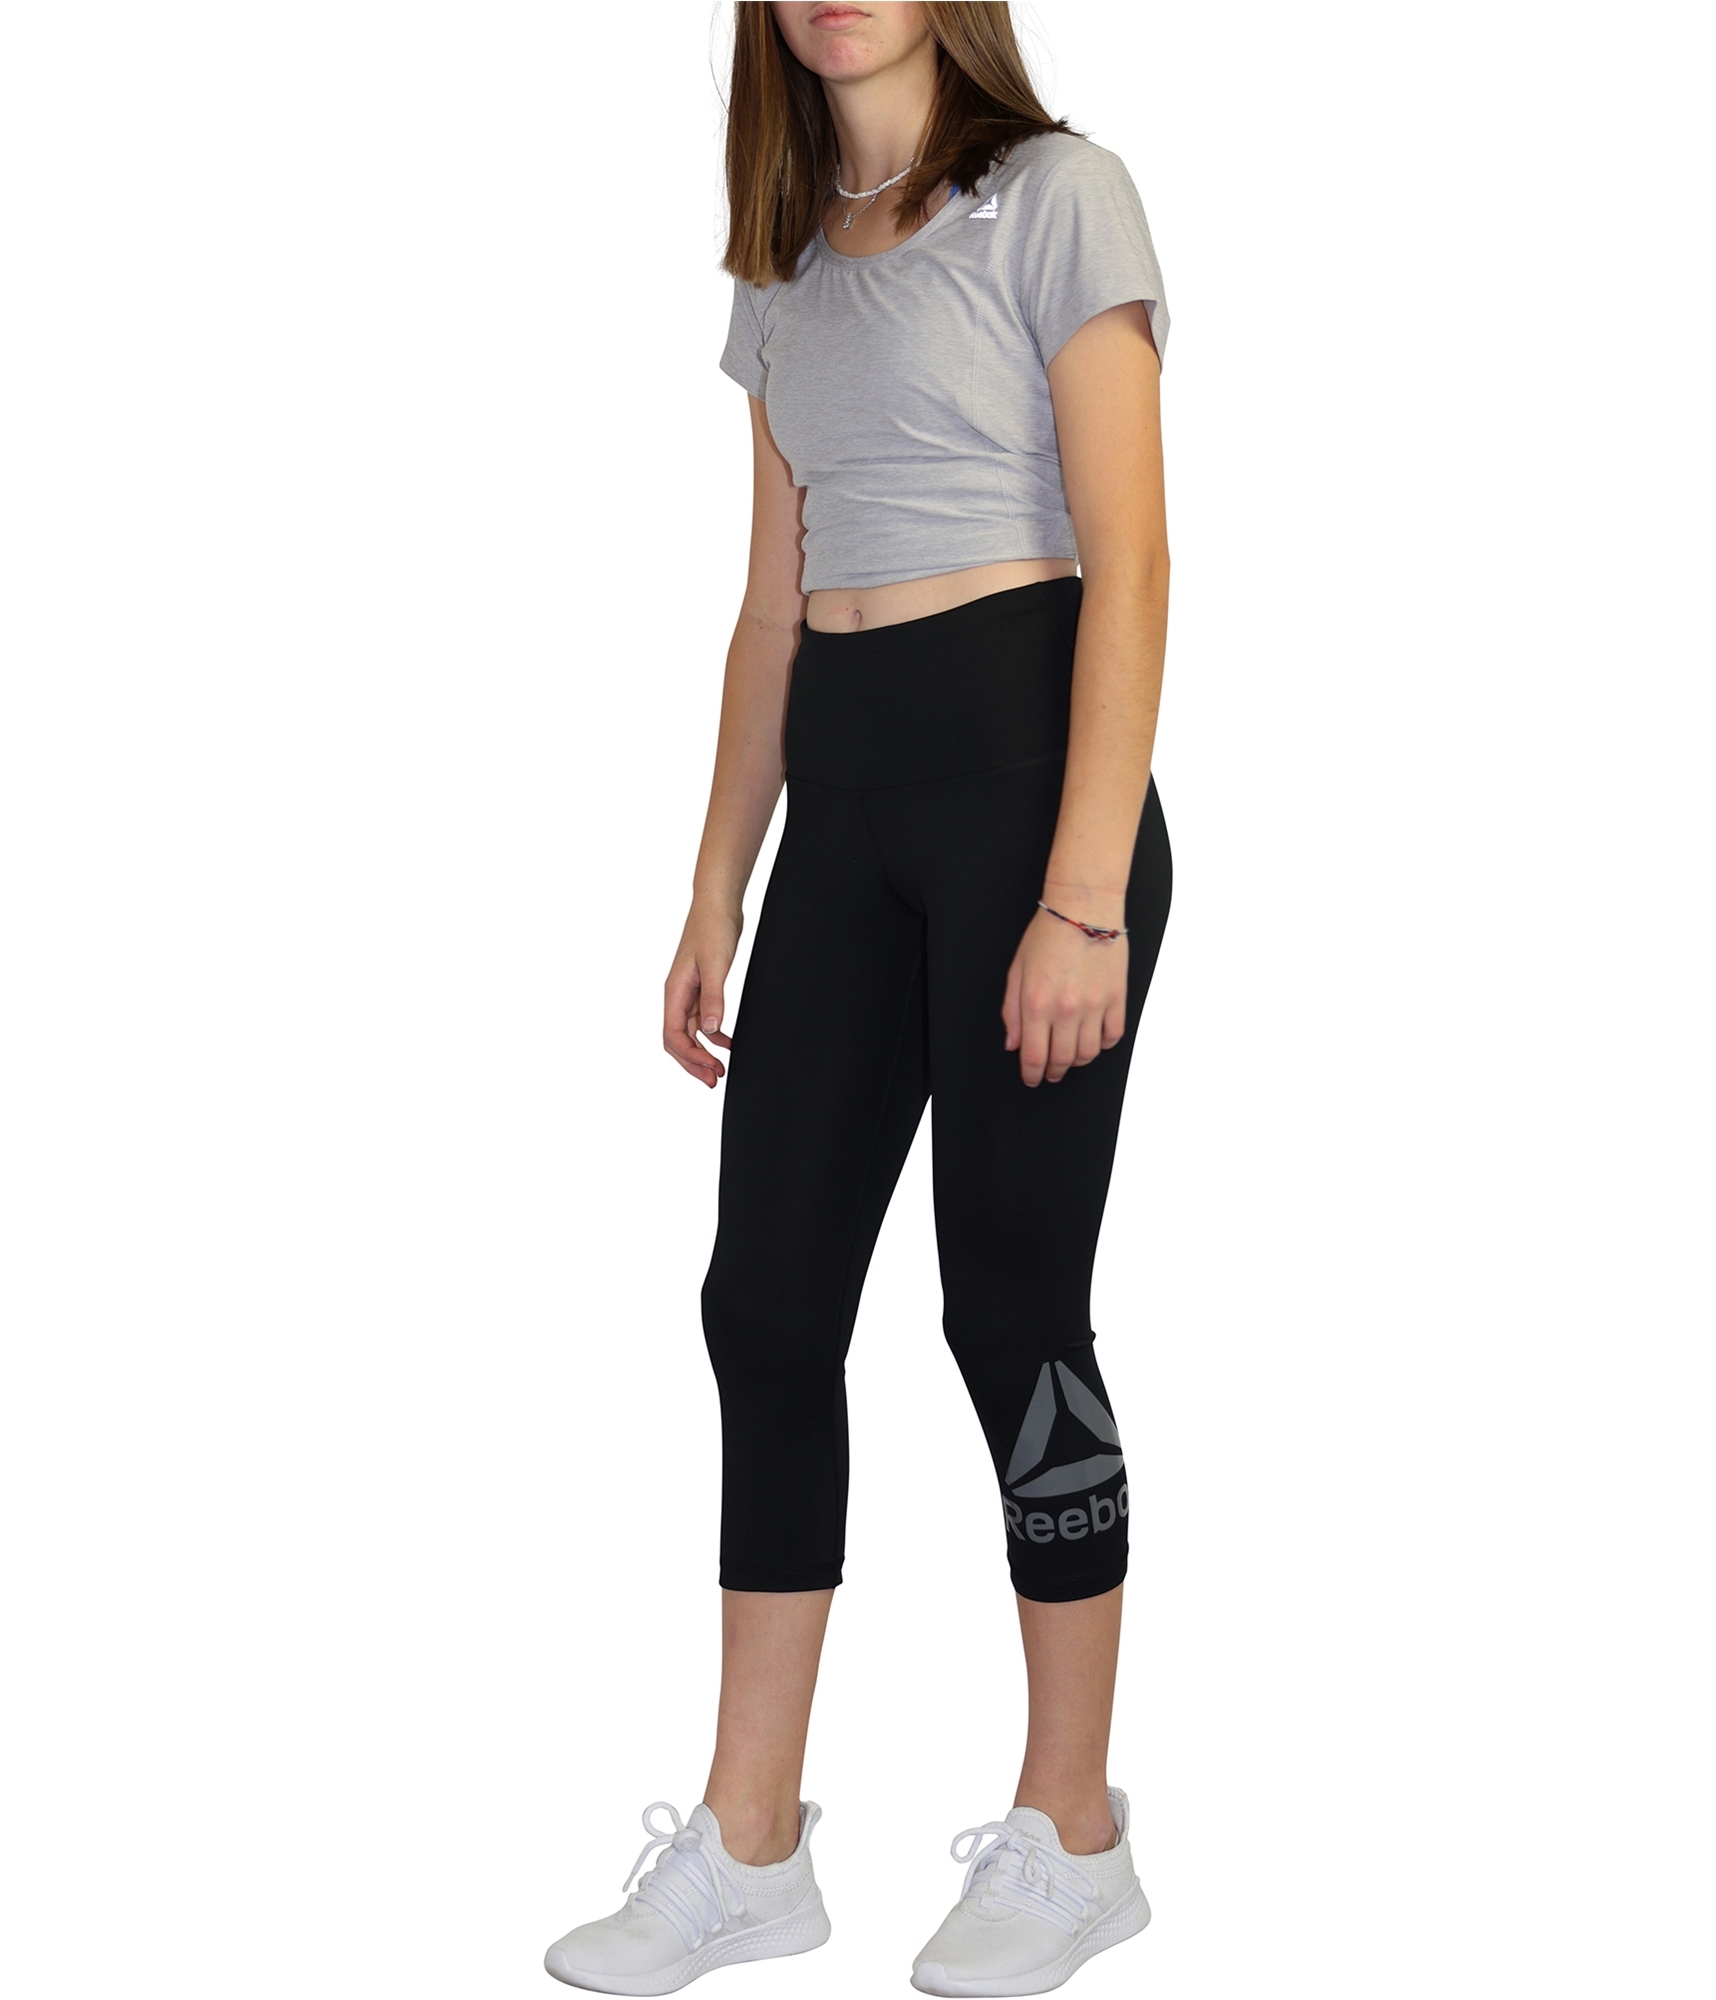 Reebok Womens Wanderlust Capri Compression Athletic Pants, Black, Small 